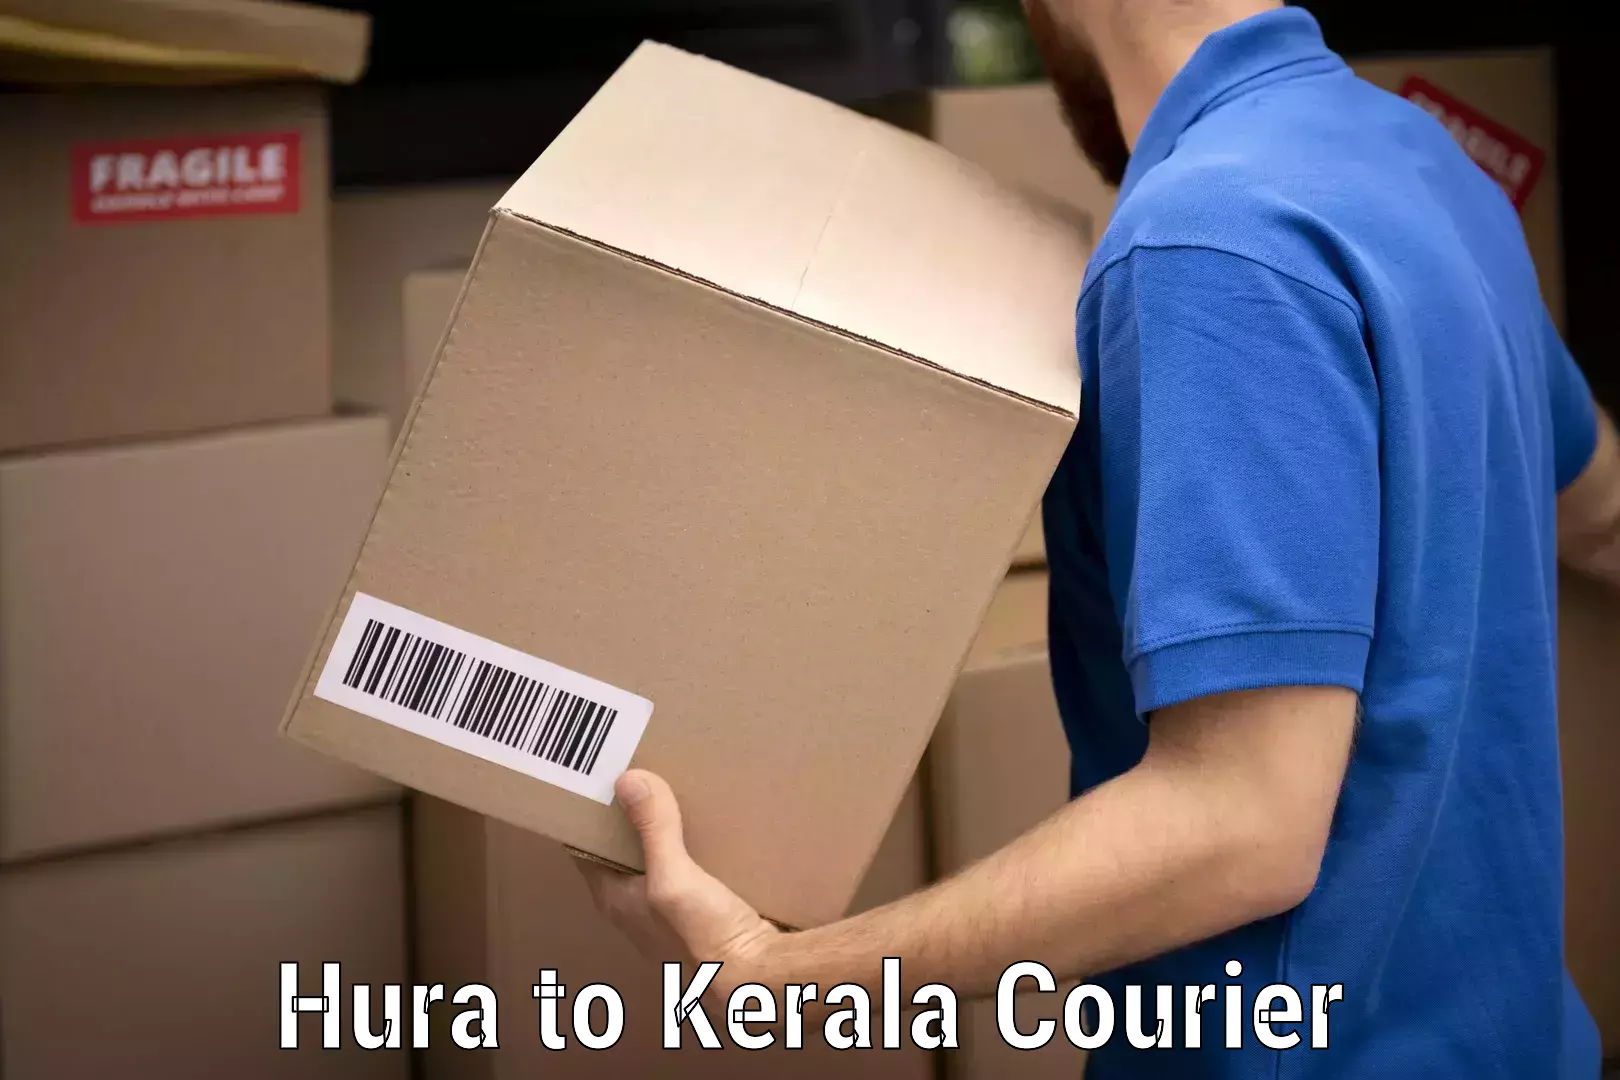 Home moving experts Hura to Kerala